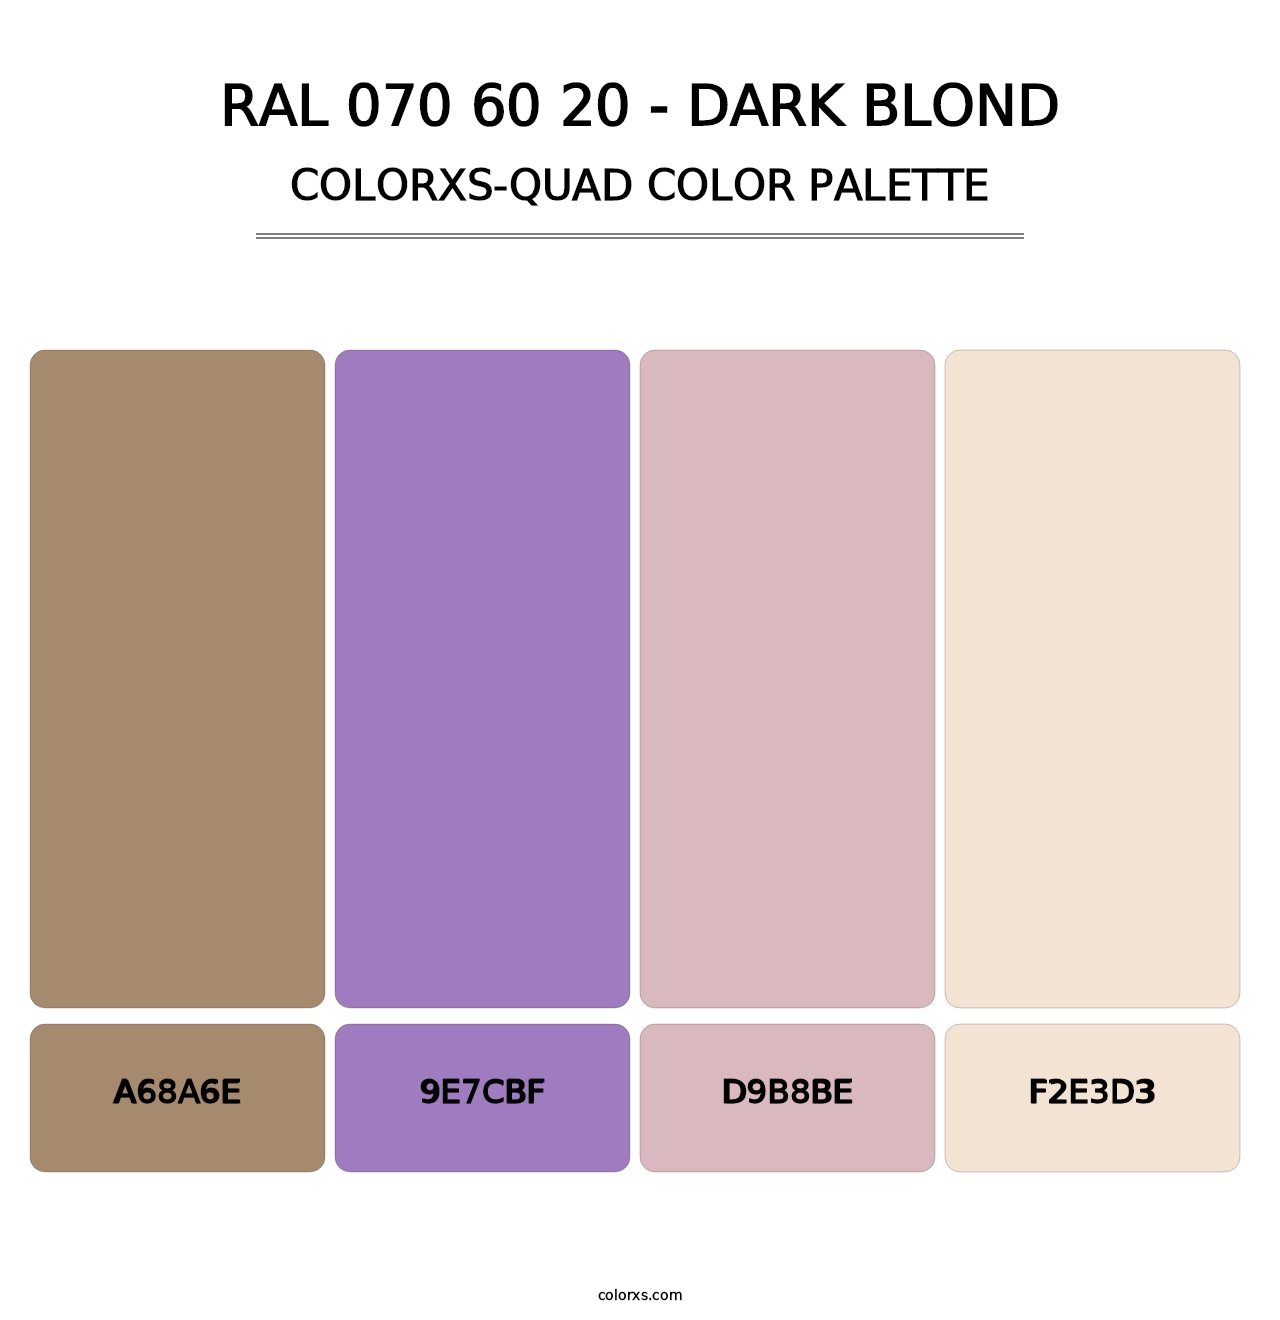 RAL 070 60 20 - Dark Blond - Colorxs Quad Palette